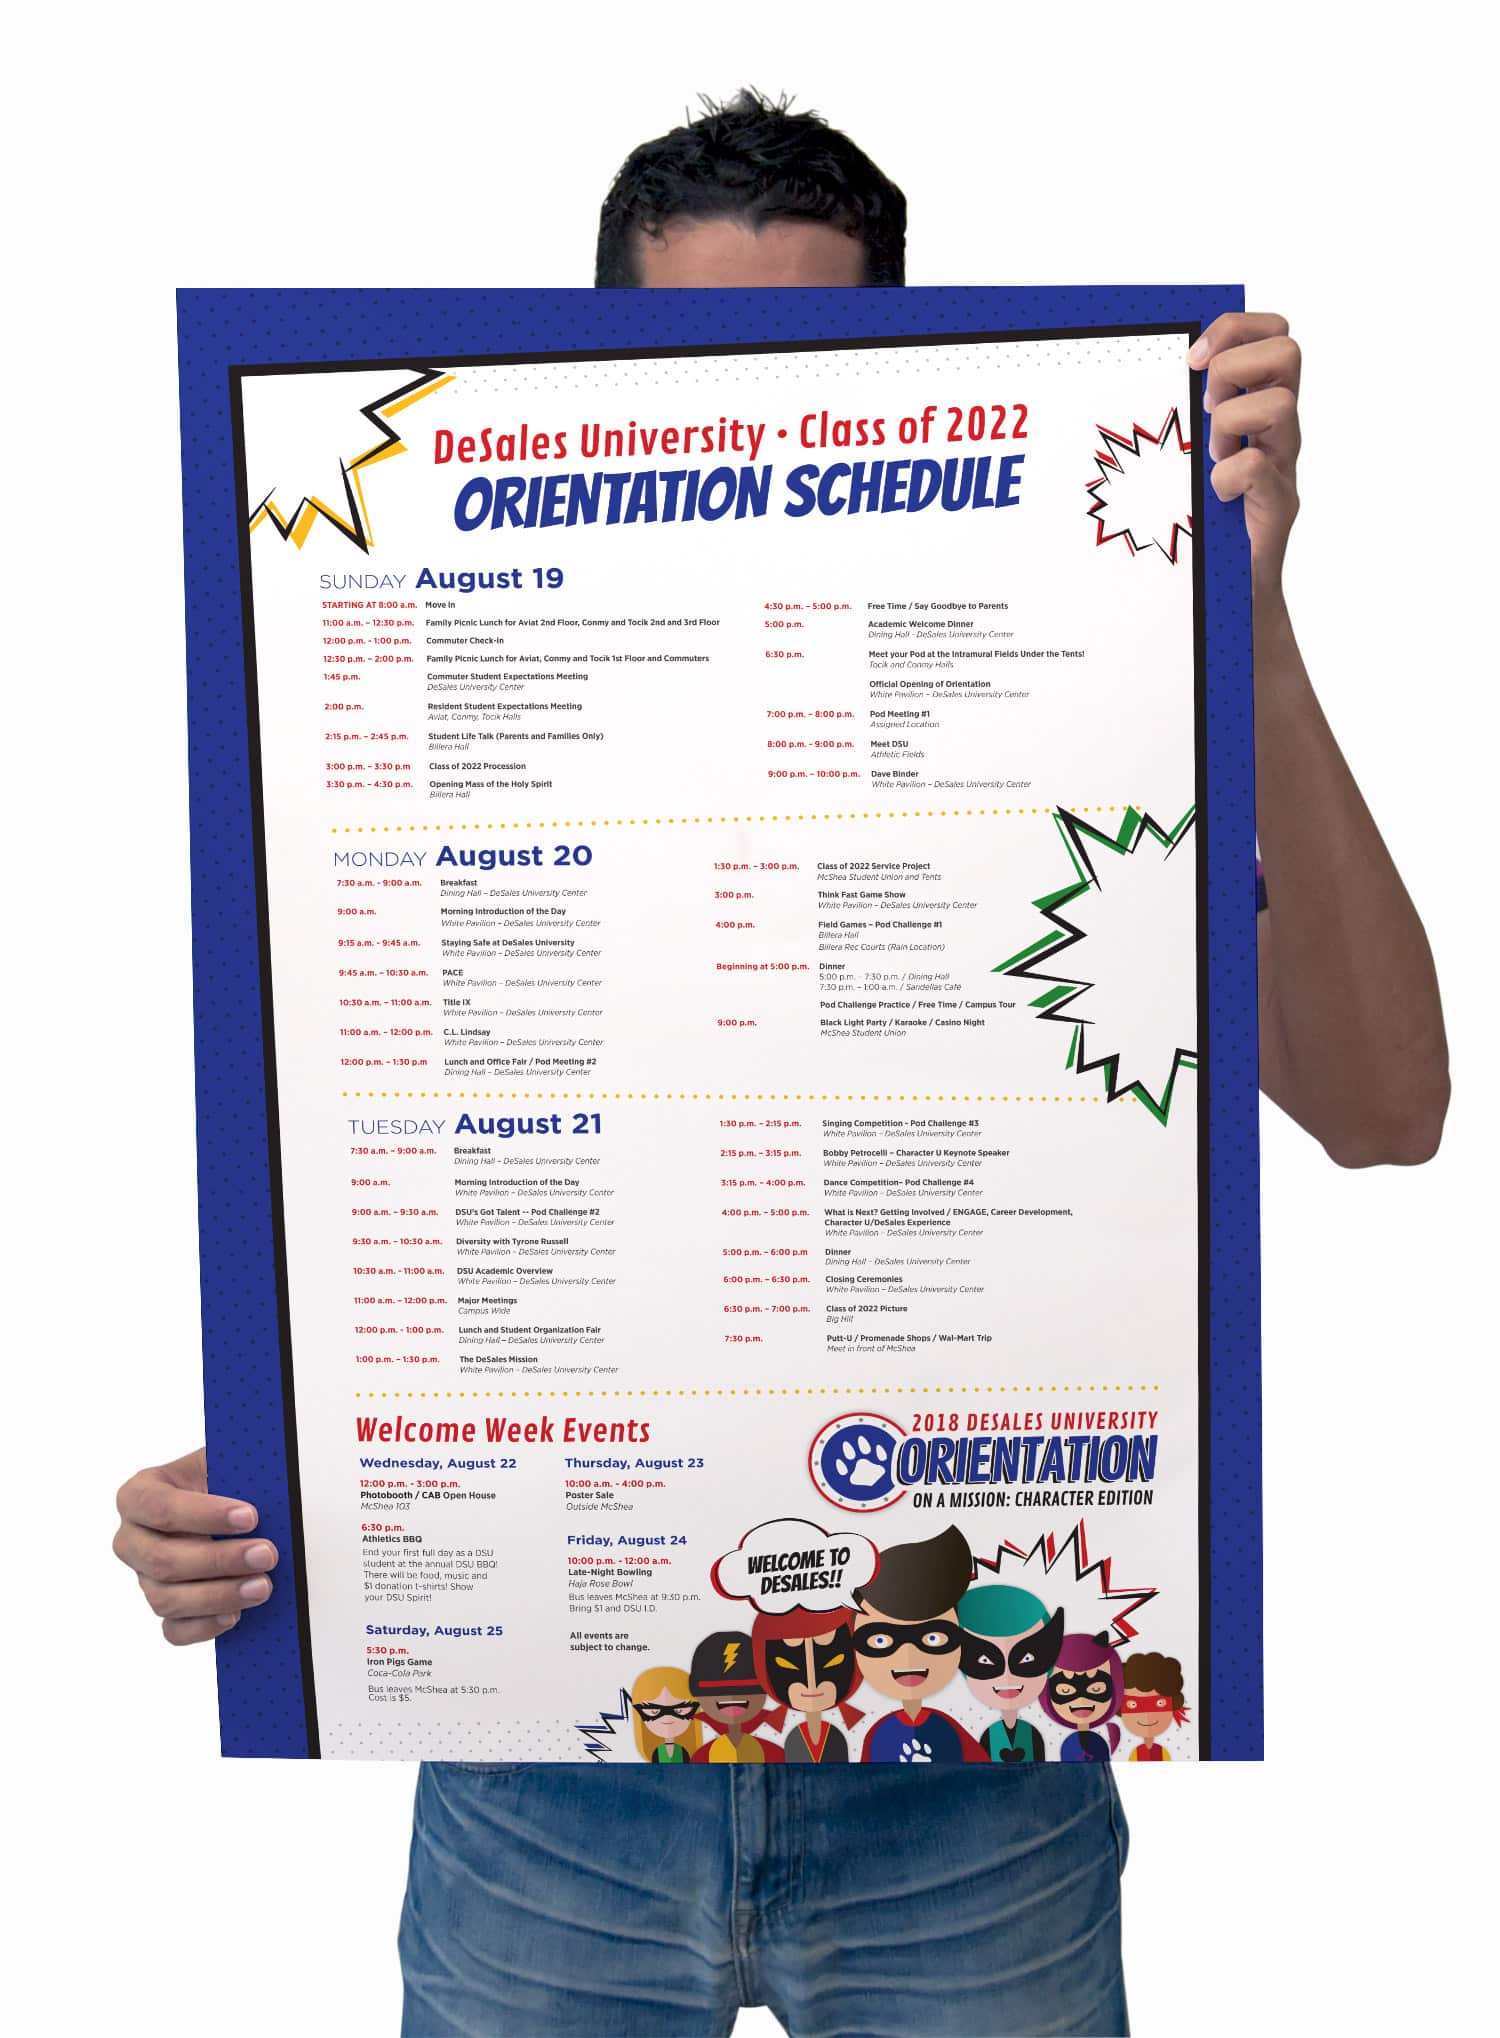 university orientation schedule poster design - desales university